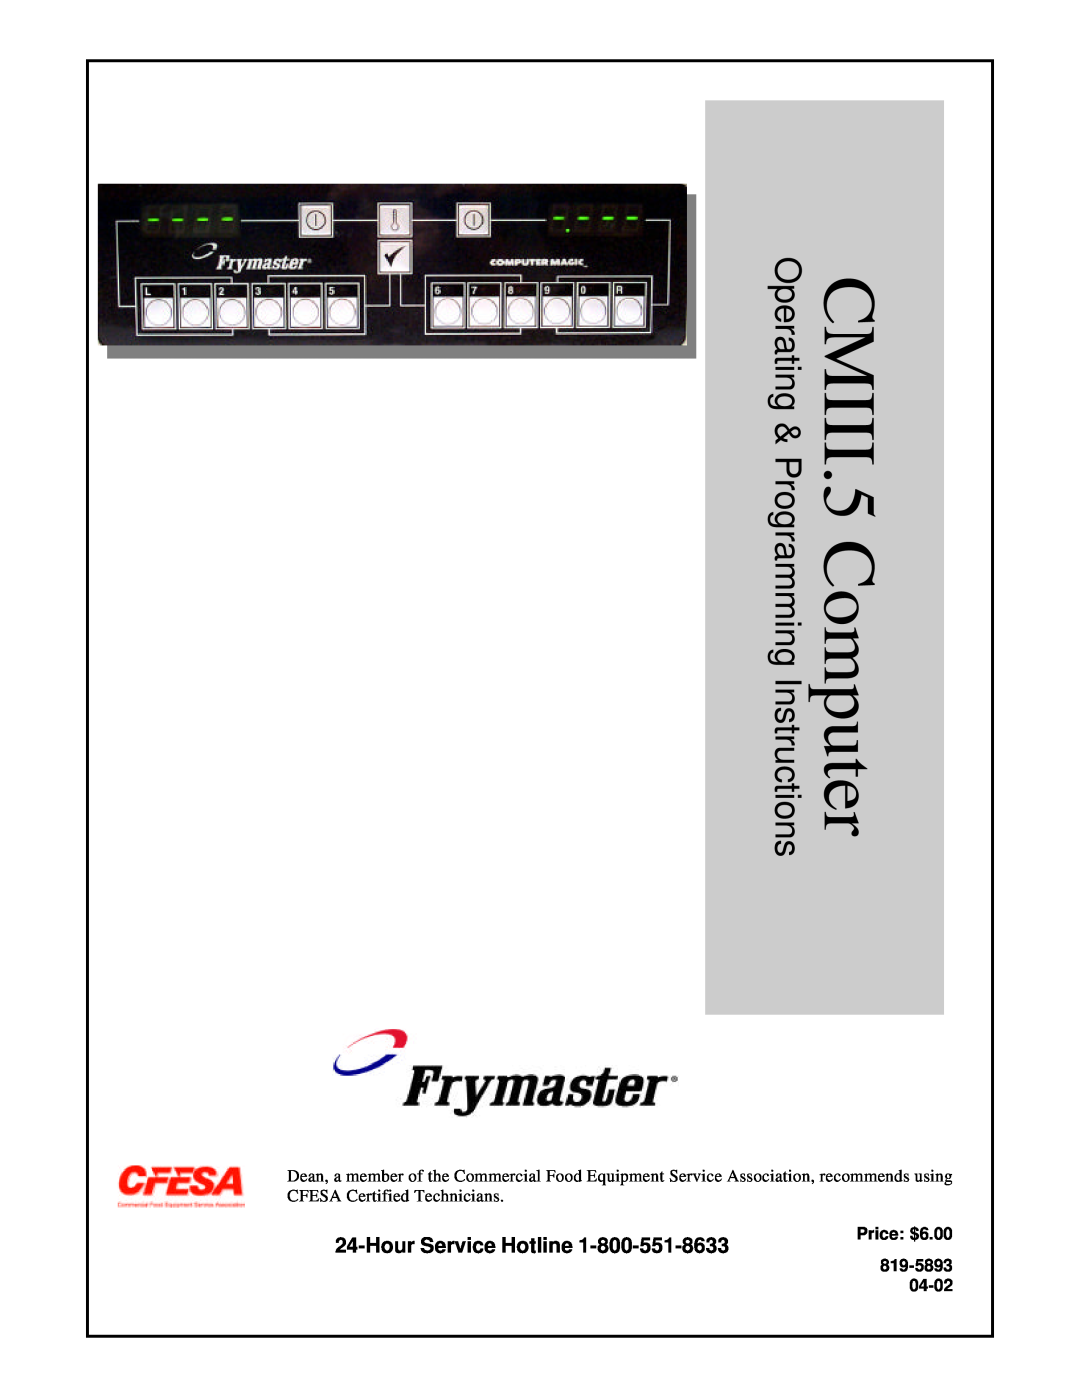 Frymaster CMIII.5 manual HourService Hotline, Operating & Programming Instructions, Price: $6.00, 819-5893 04-02 